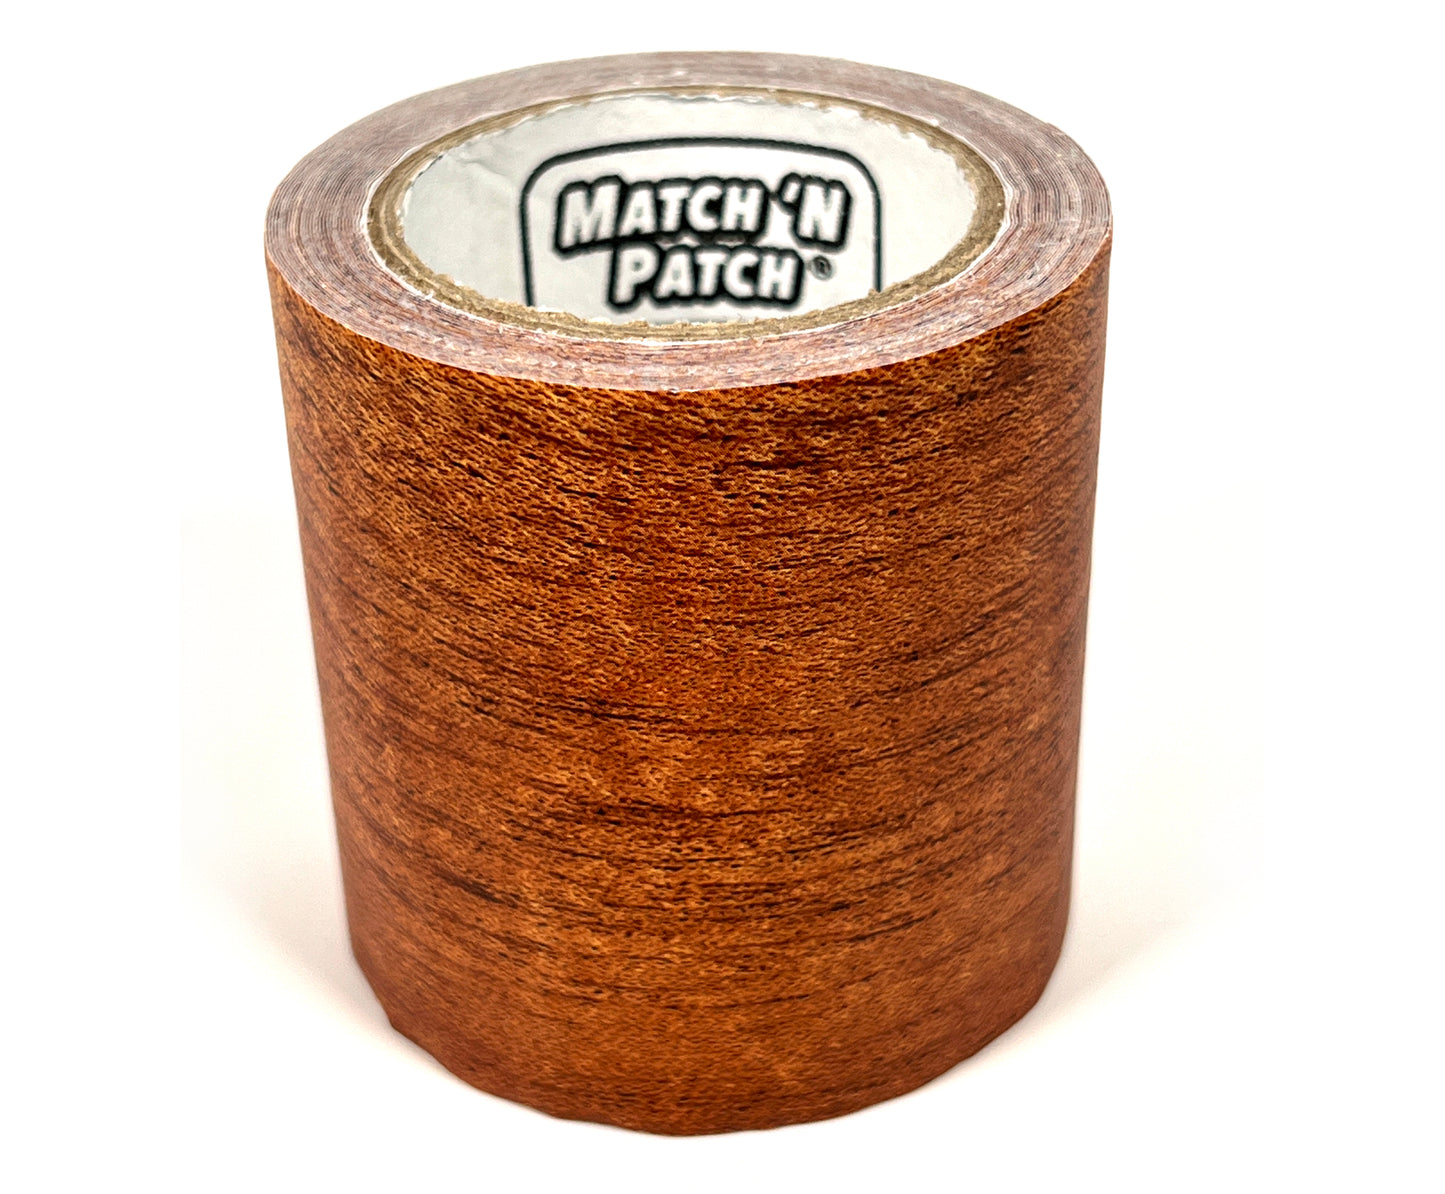 Mahogany Wood Print Repair Tape – Match 'N Patch